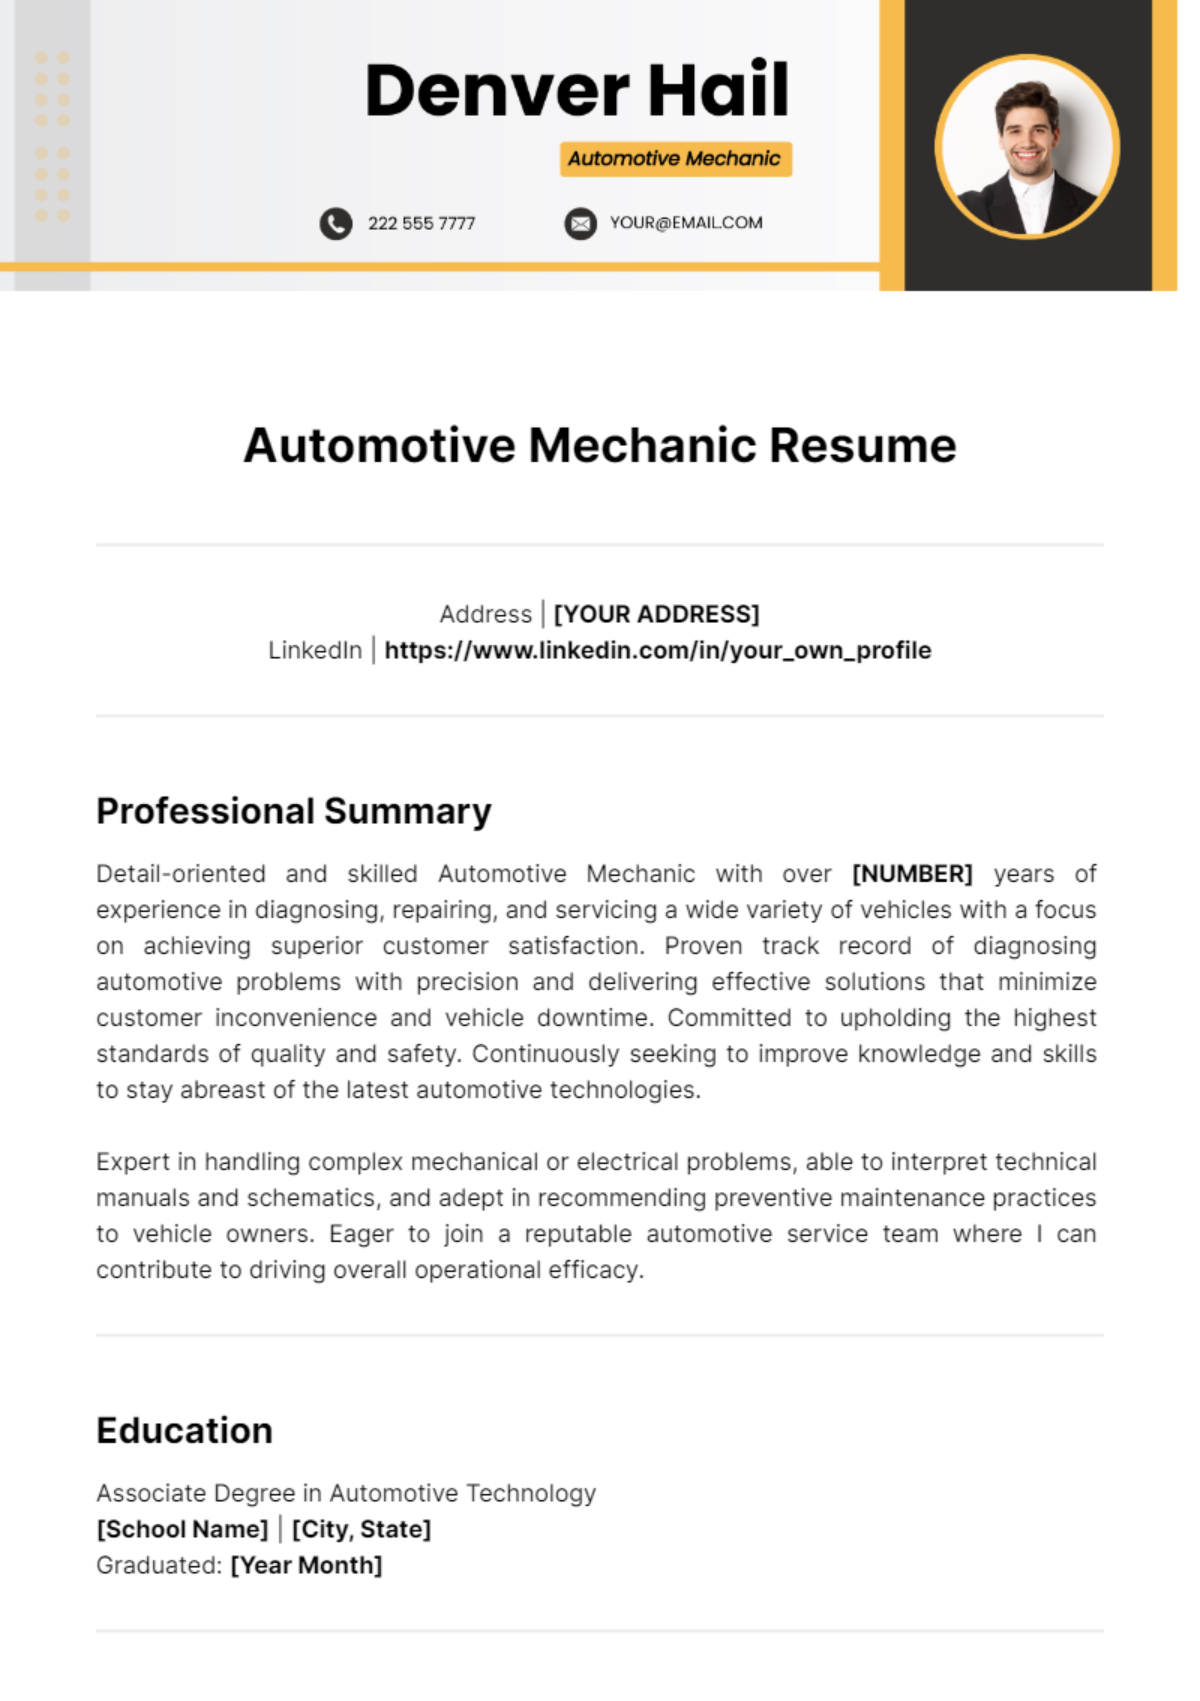 Automotive Mechanic Resume Template